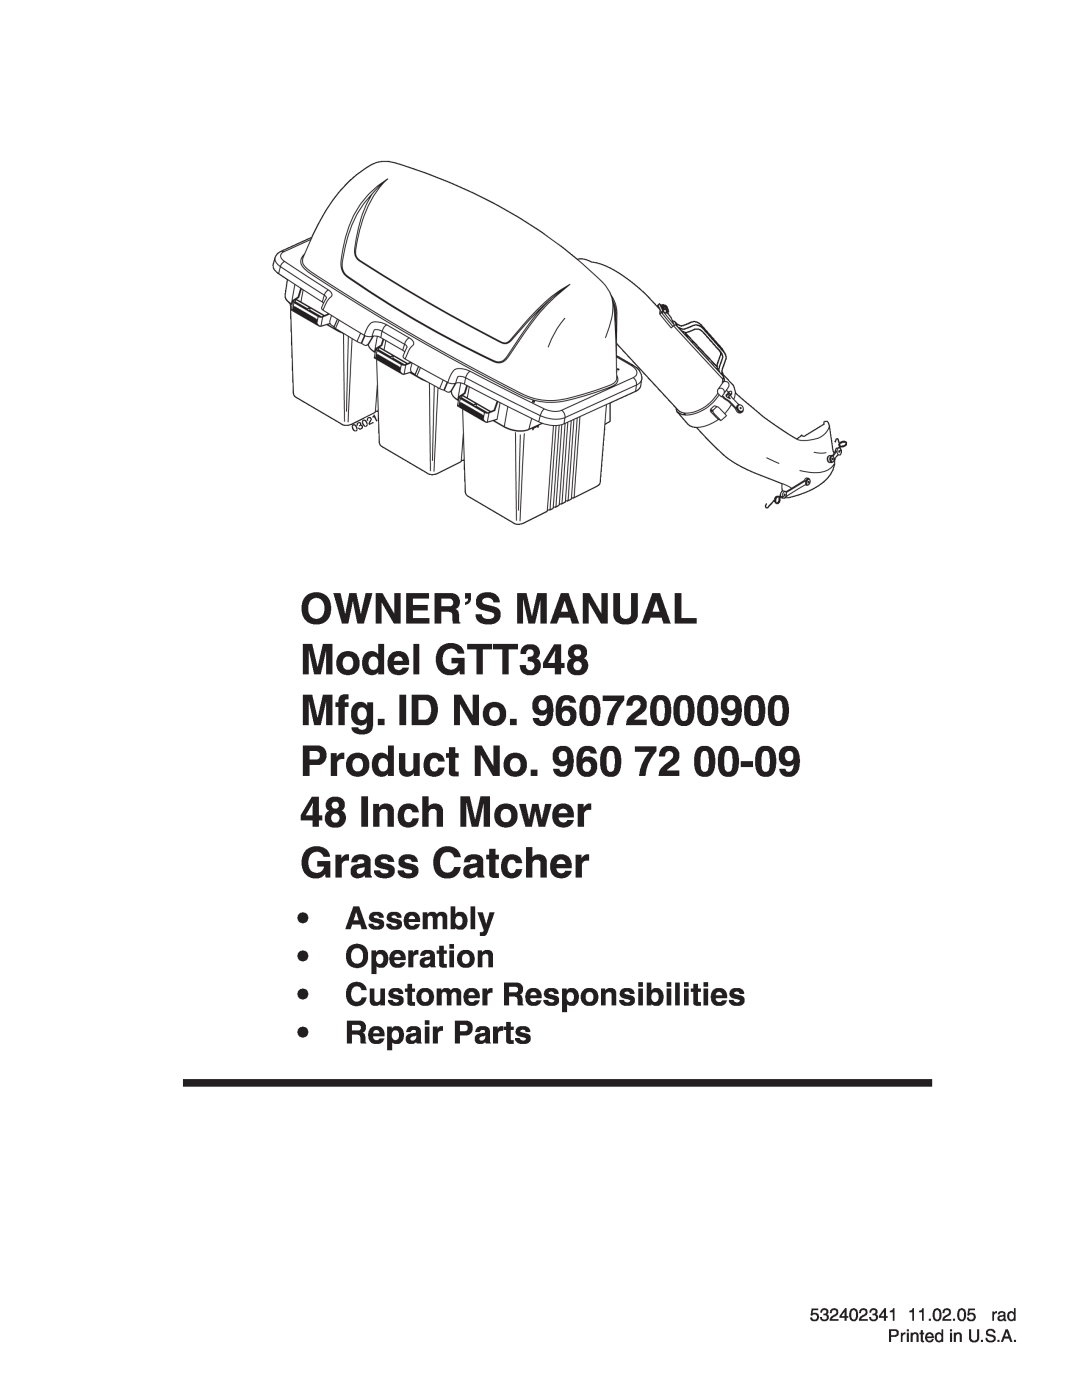 Husqvarna owner manual OWNER’S MANUAL Model GTT348 Mfg. ID No Product No. 960 72, Inch Mower Grass Catcher 